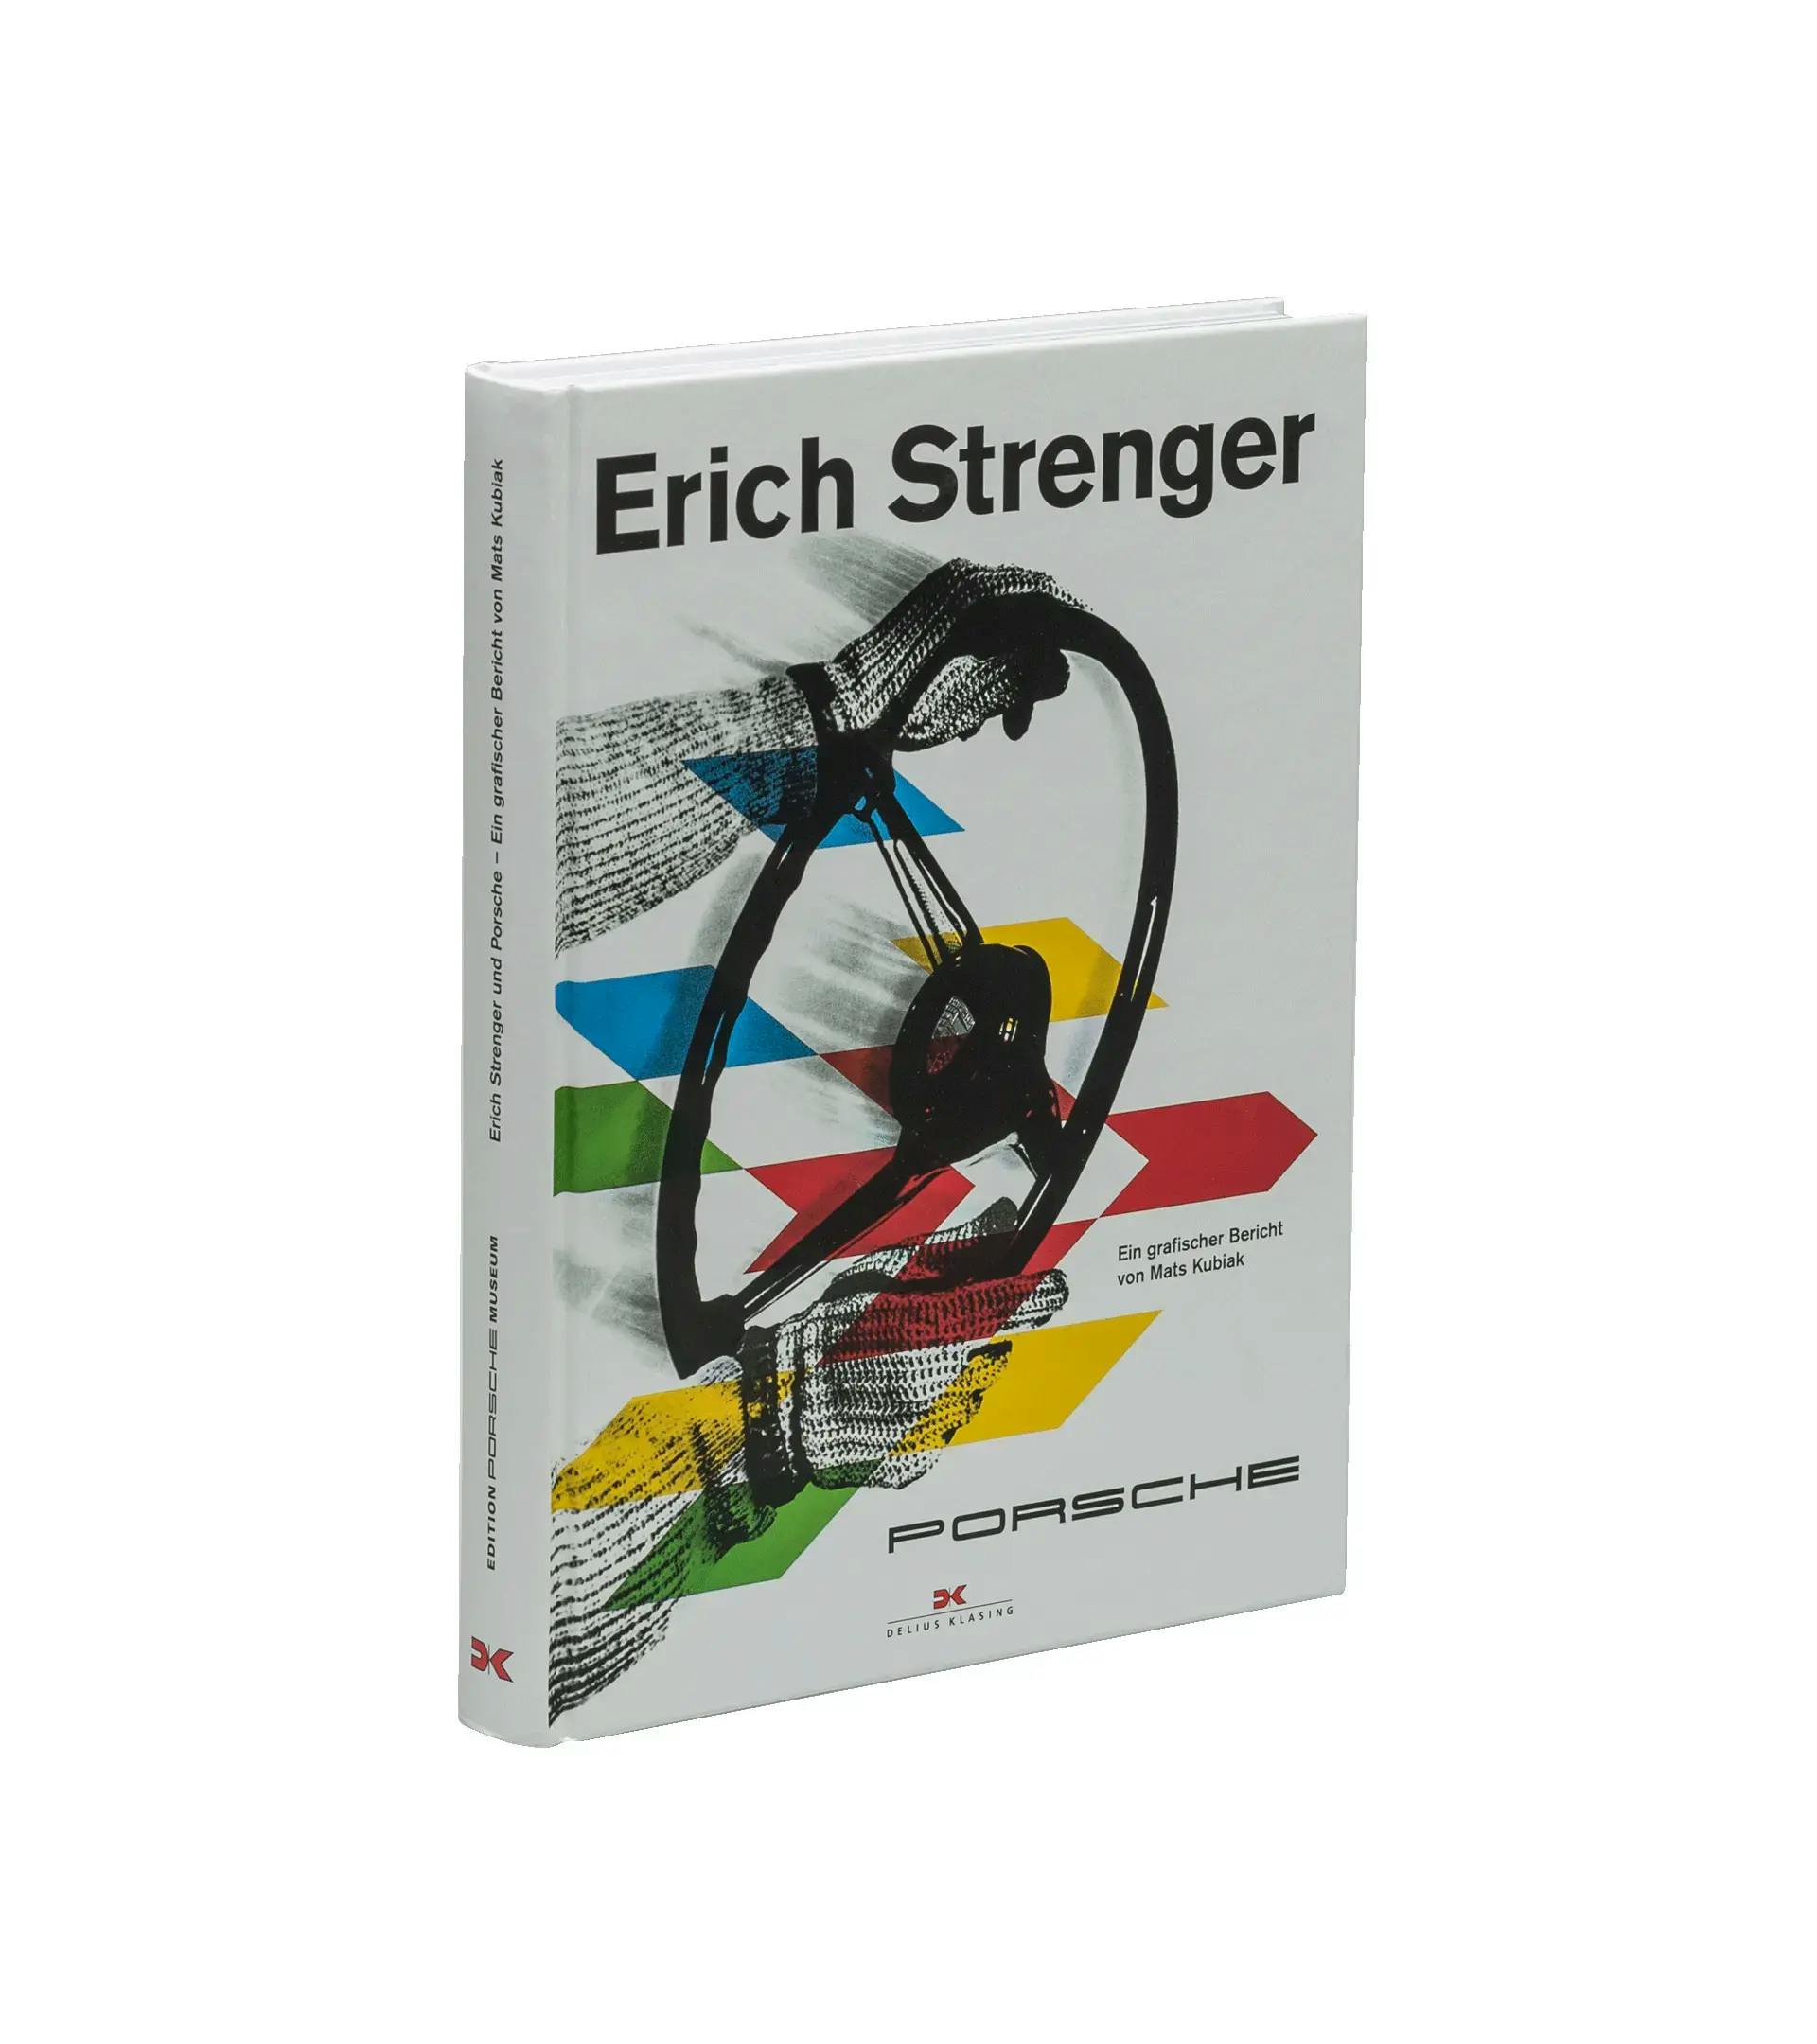 Buch E. Strenger und Porsche 1